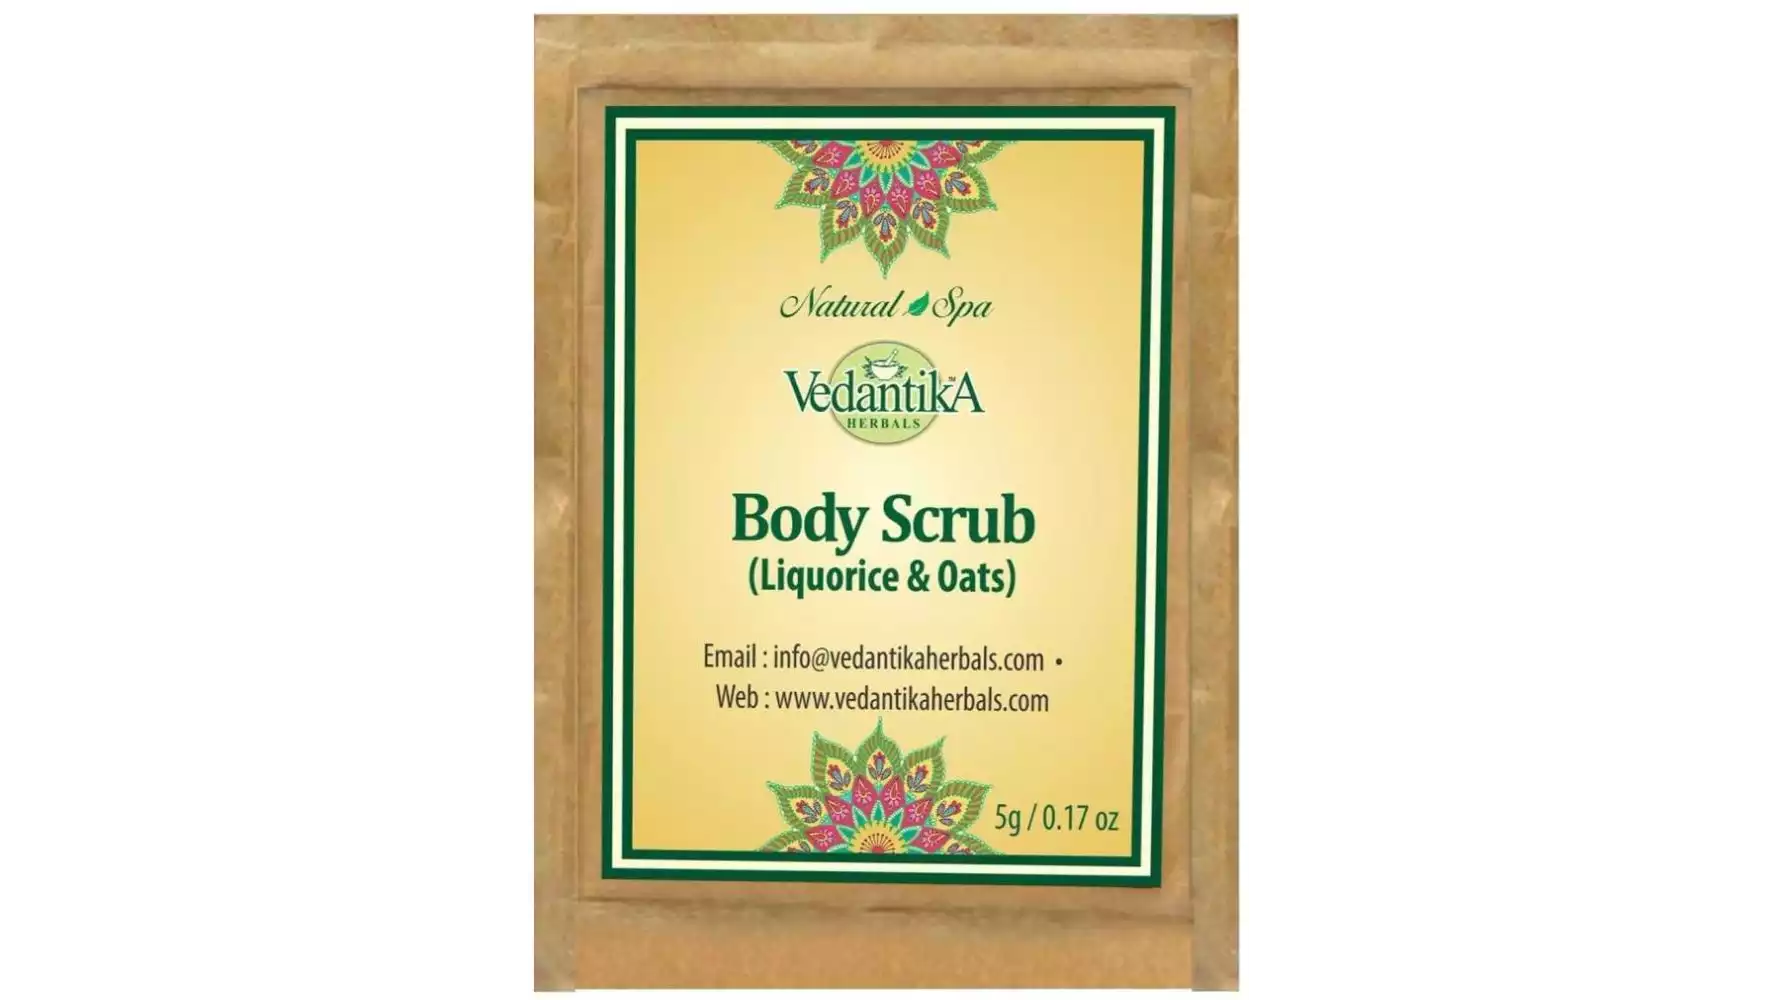 Vedantika Herbals Liquorice & Oats Body Scrub Trial Pack (5g)